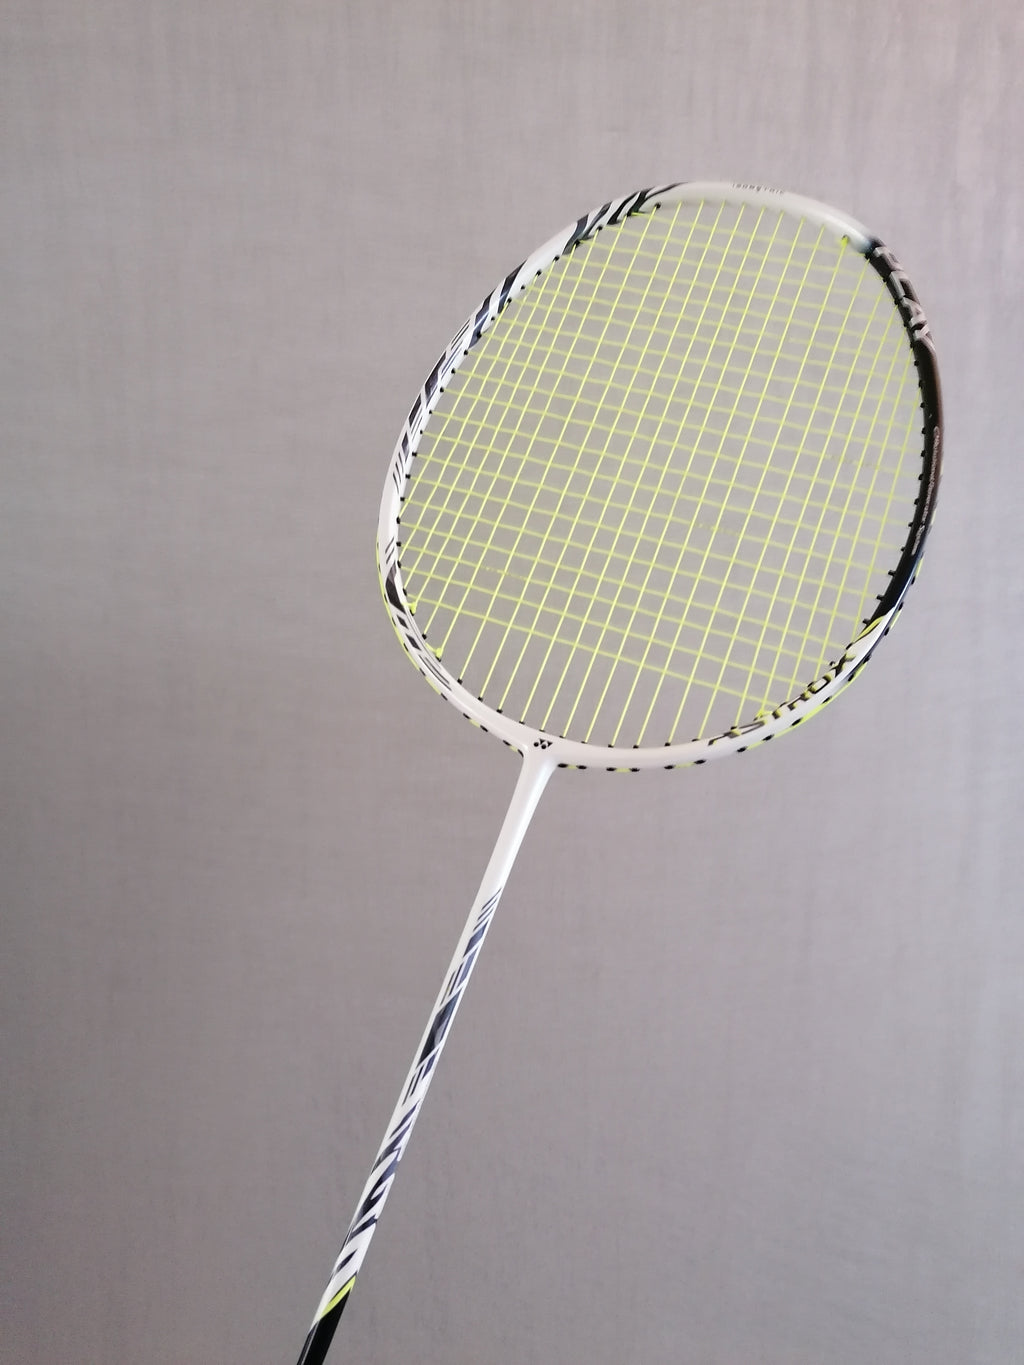 Yonex Astrox 99 Play 4U badminton racket - badminton racket review